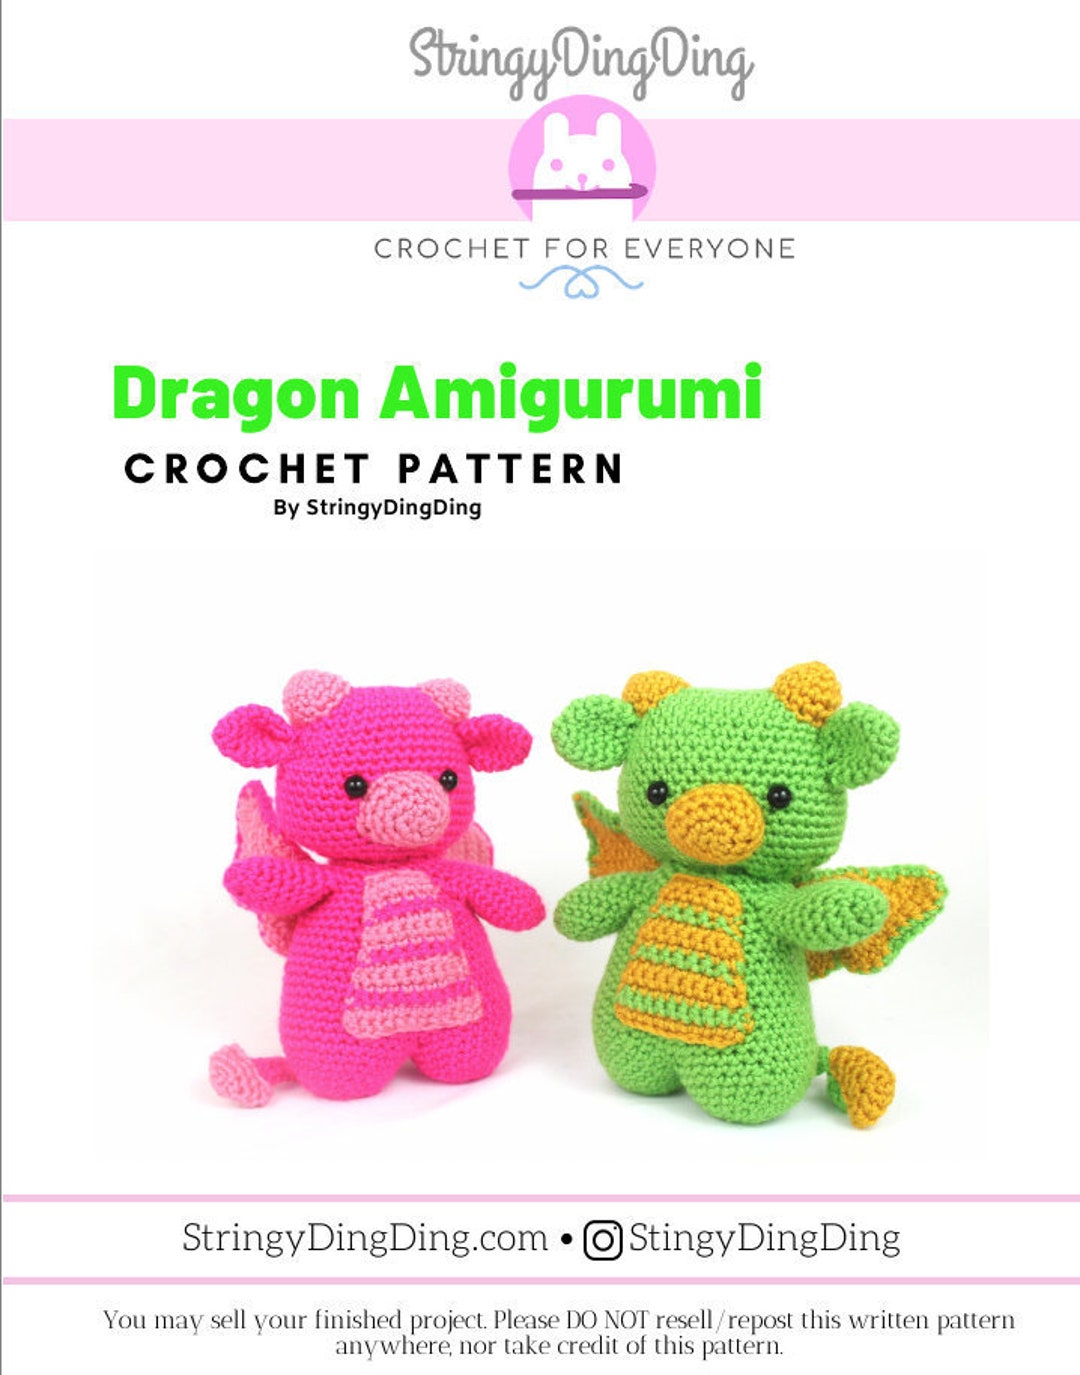 Free Amigurumi Crochet Patterns - StringyDingDing